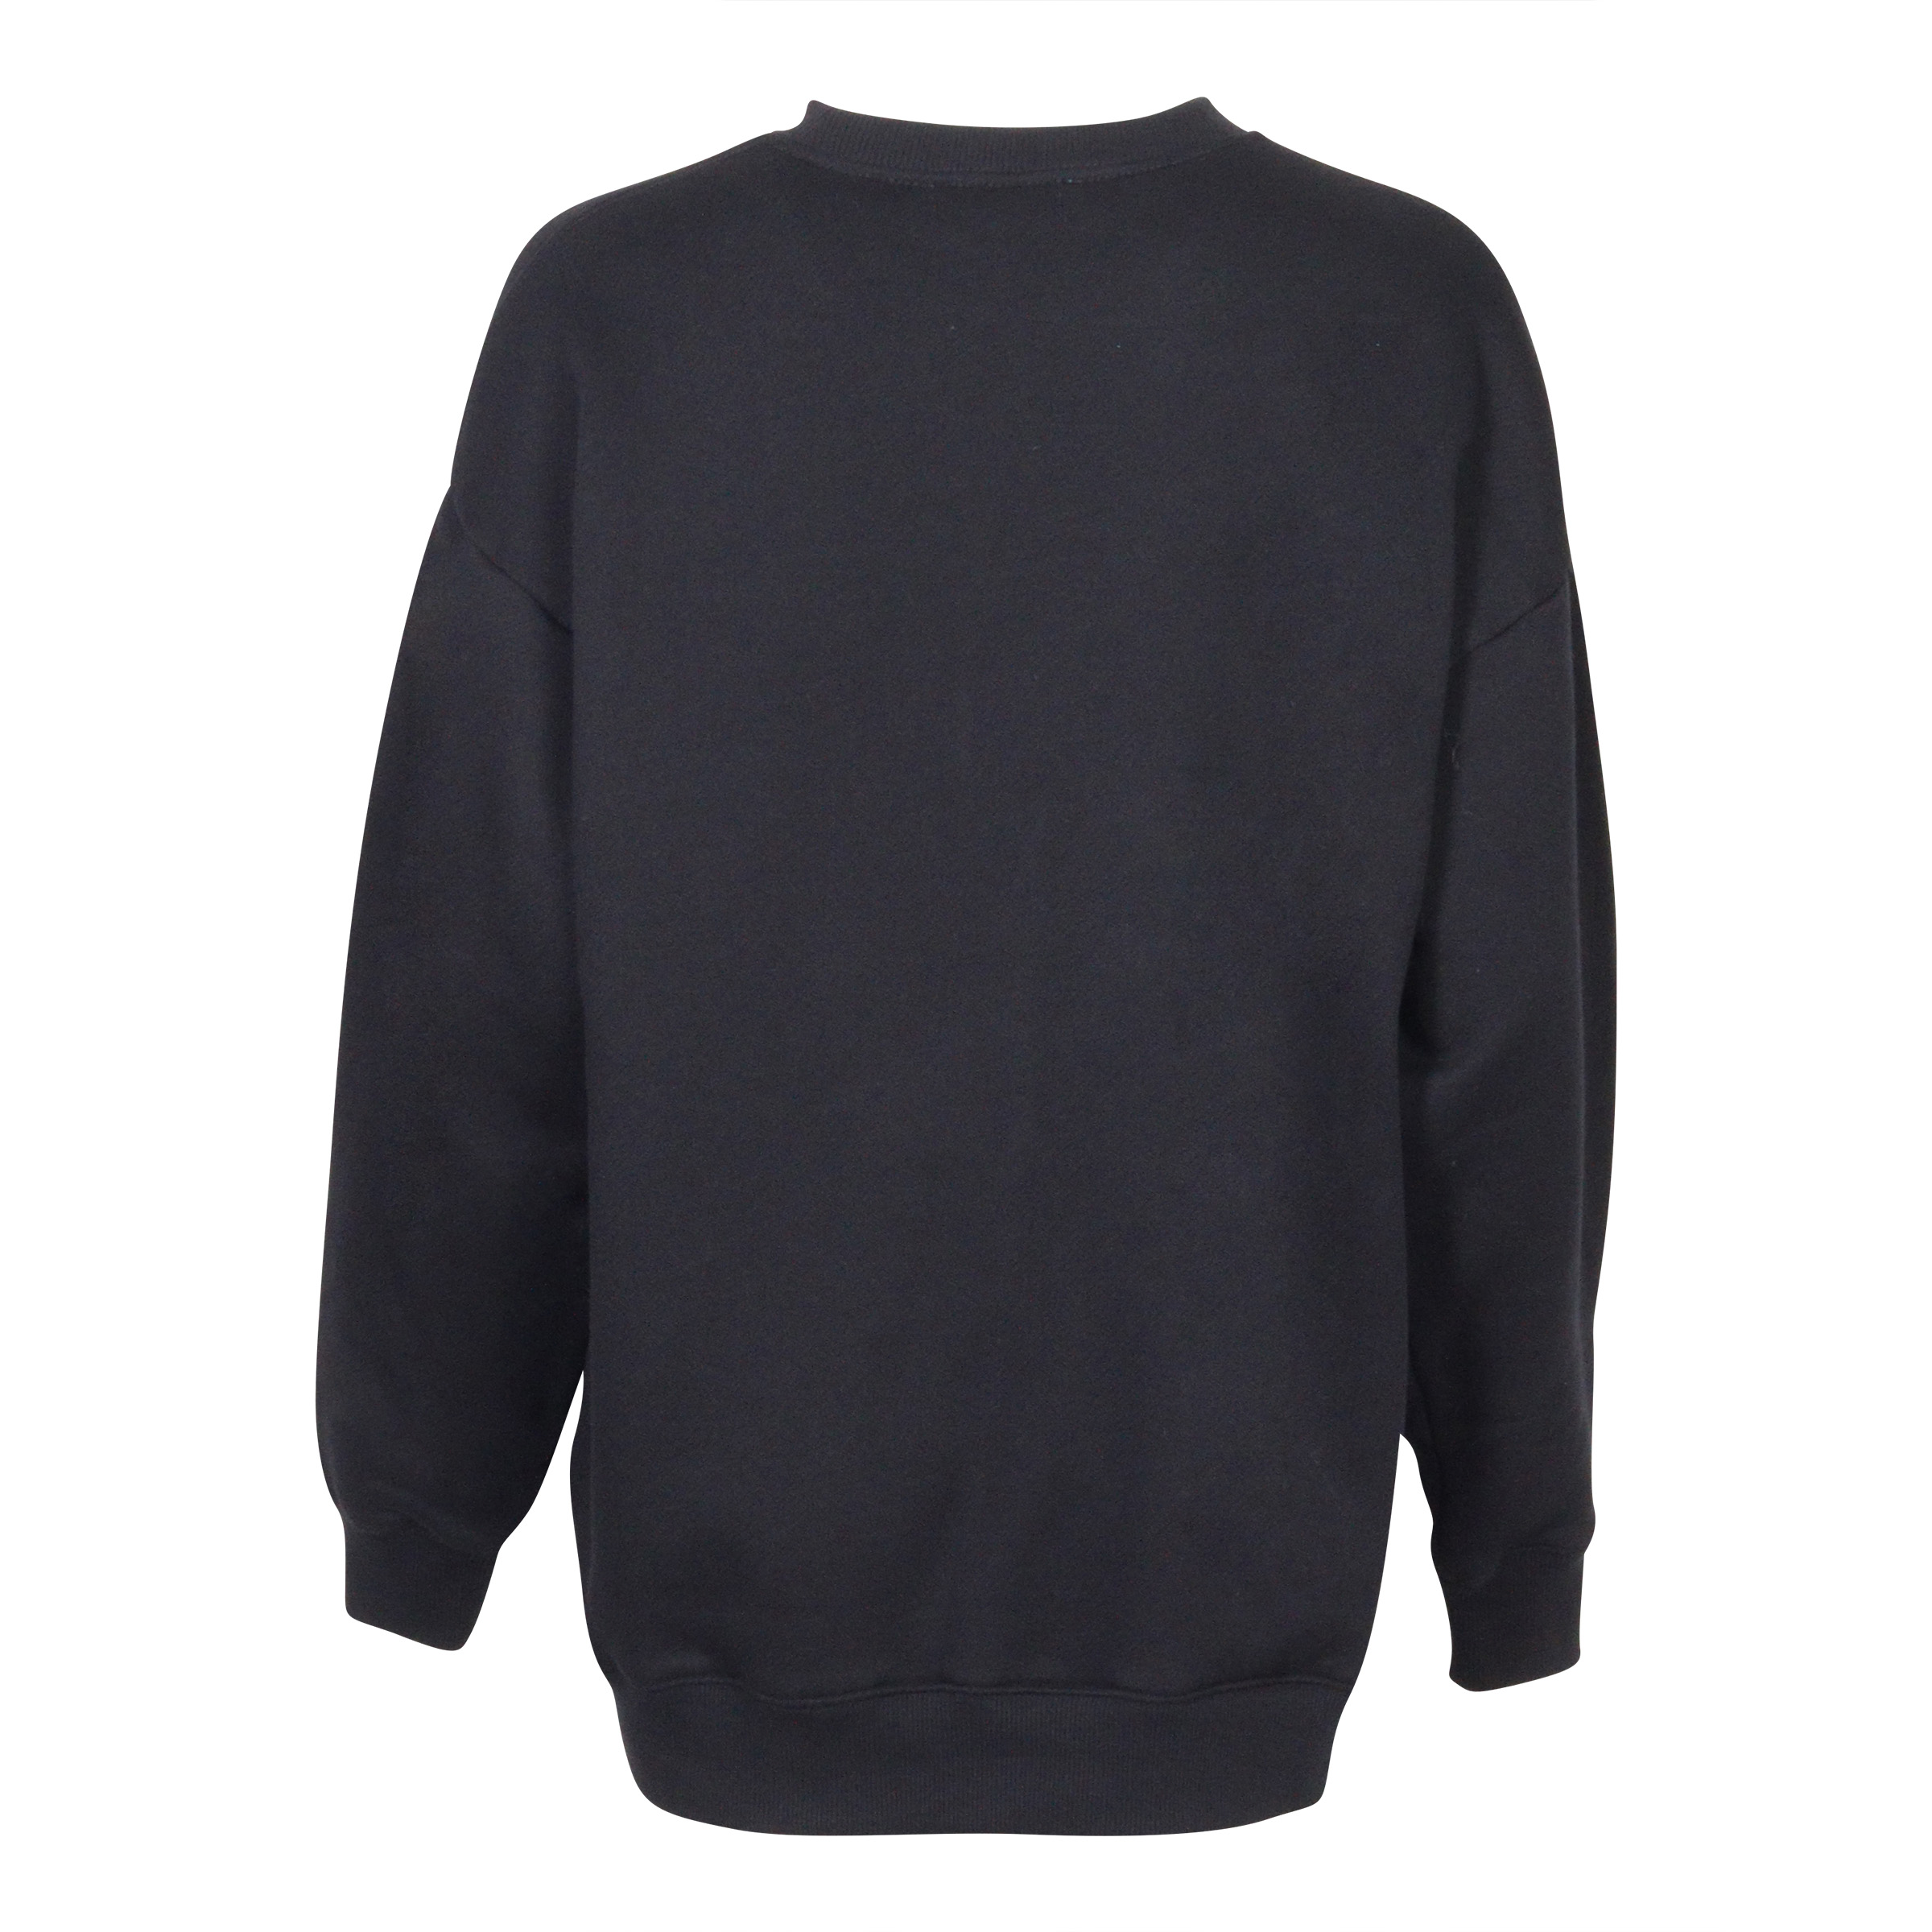 Acne Studios Sweatshirt Fienele Inverse Label Black